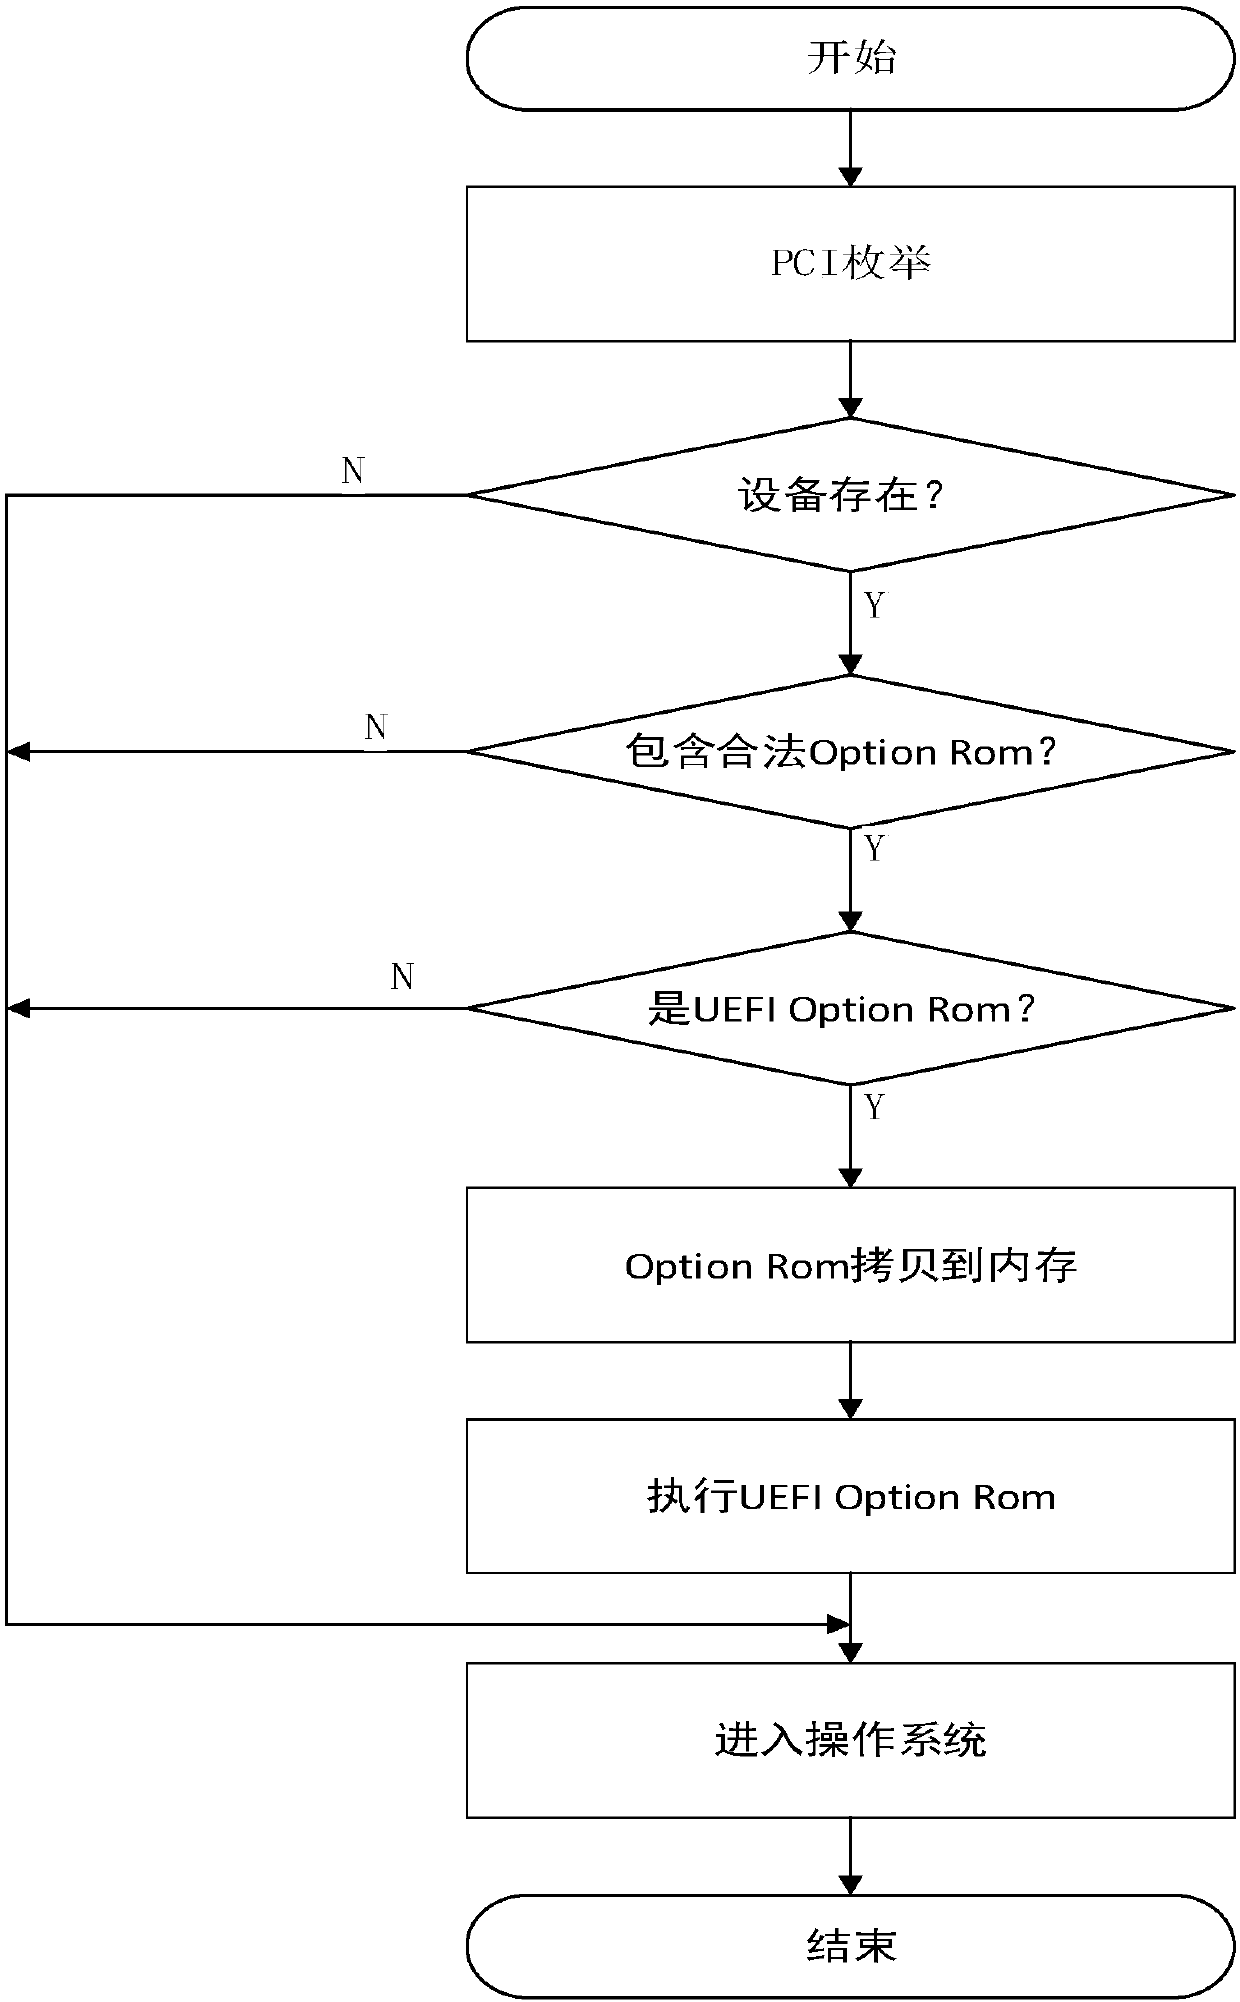 Method for loading PCIE Option Rom to UEFI BIOS